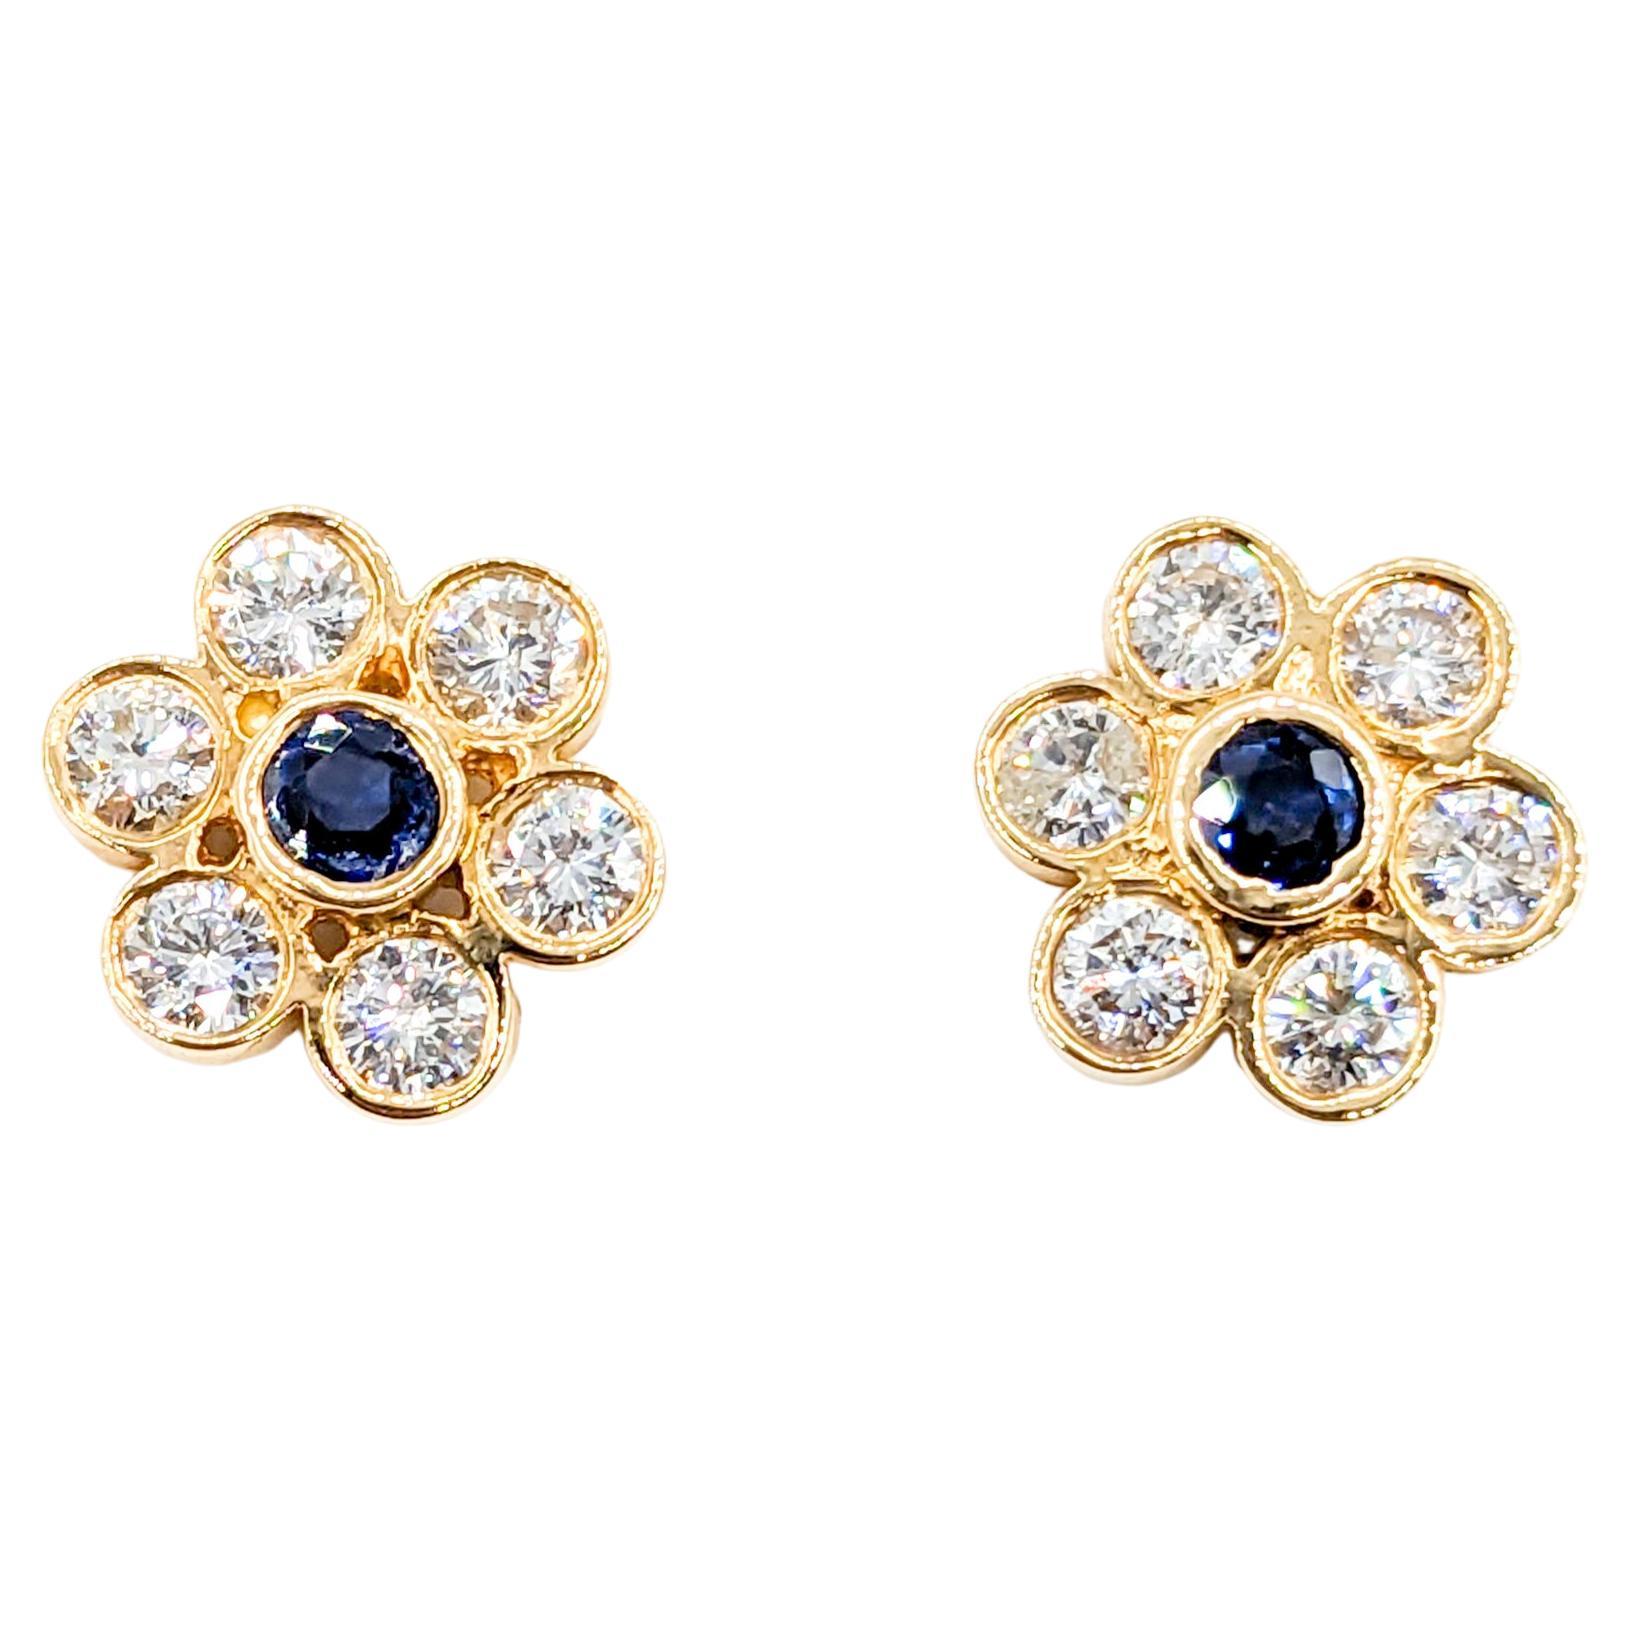 Vintage Diamond & Sapphire Floral Stud Earrings in 14K Gold